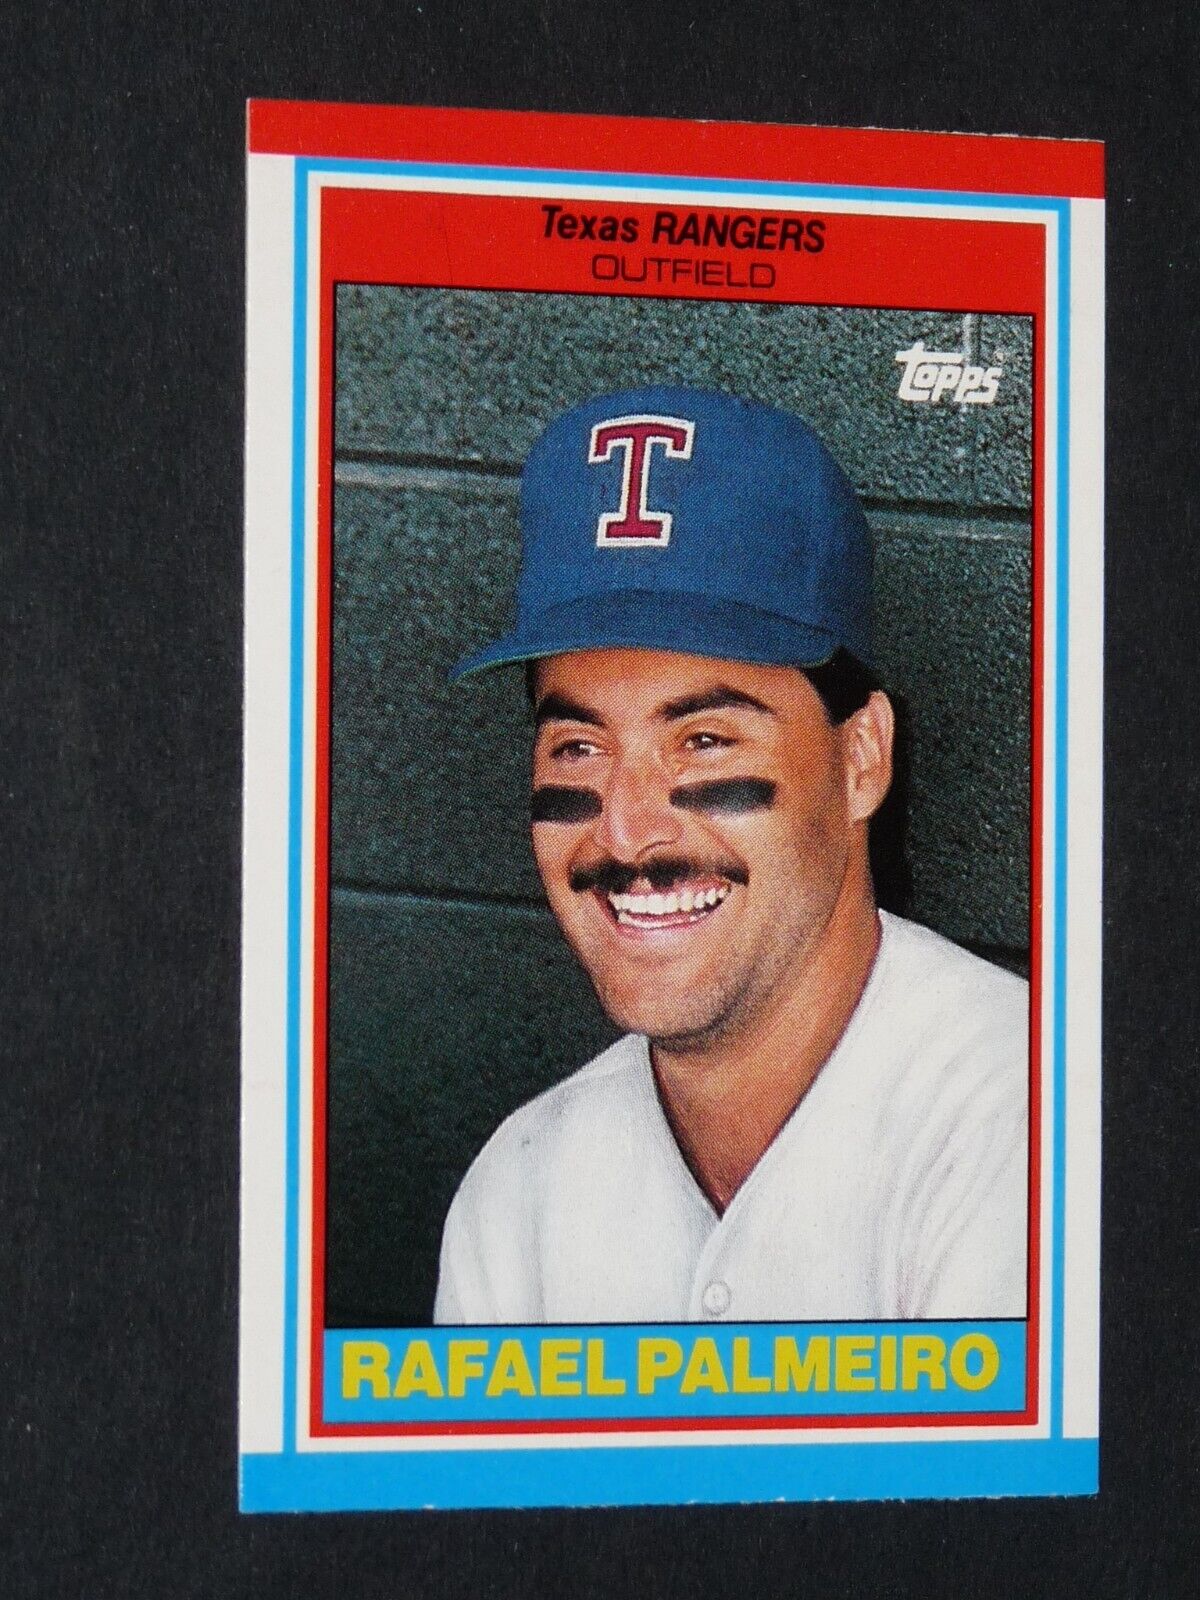 1989 TOPPS MINI BASEBALL CARD #58 RAFAEL PALMEIRO TEXAS RANGERS